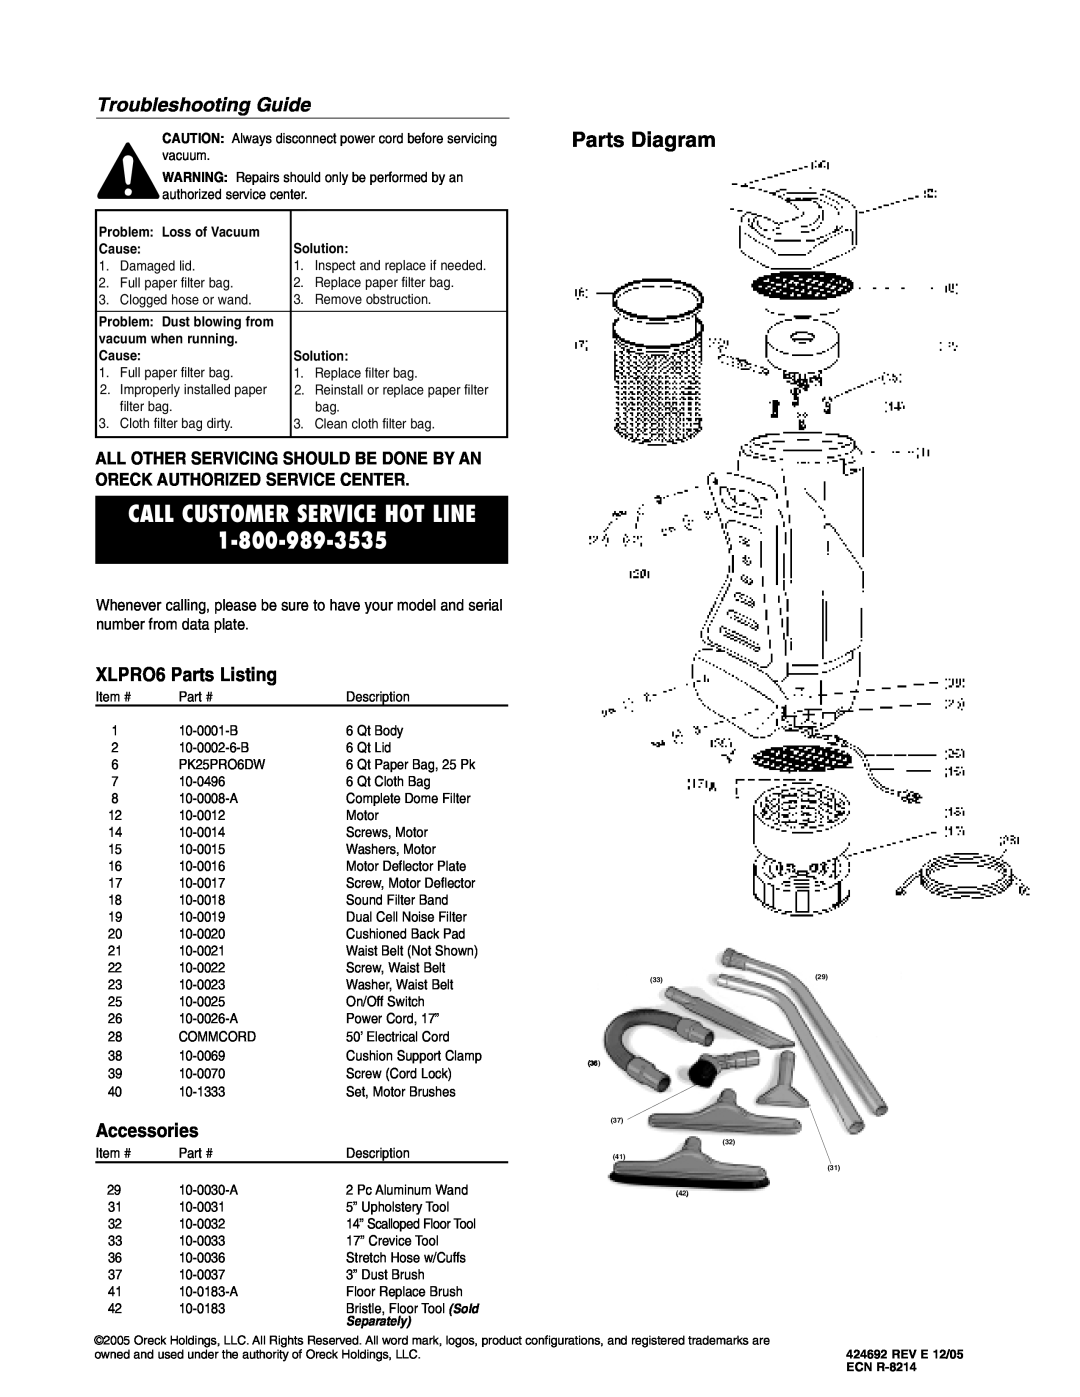 Oreck Parts Diagram, Troubleshooting Guide, XLPRO6 Parts Listing, Accessories, Problem Loss of Vacuum, Solution, Cause 